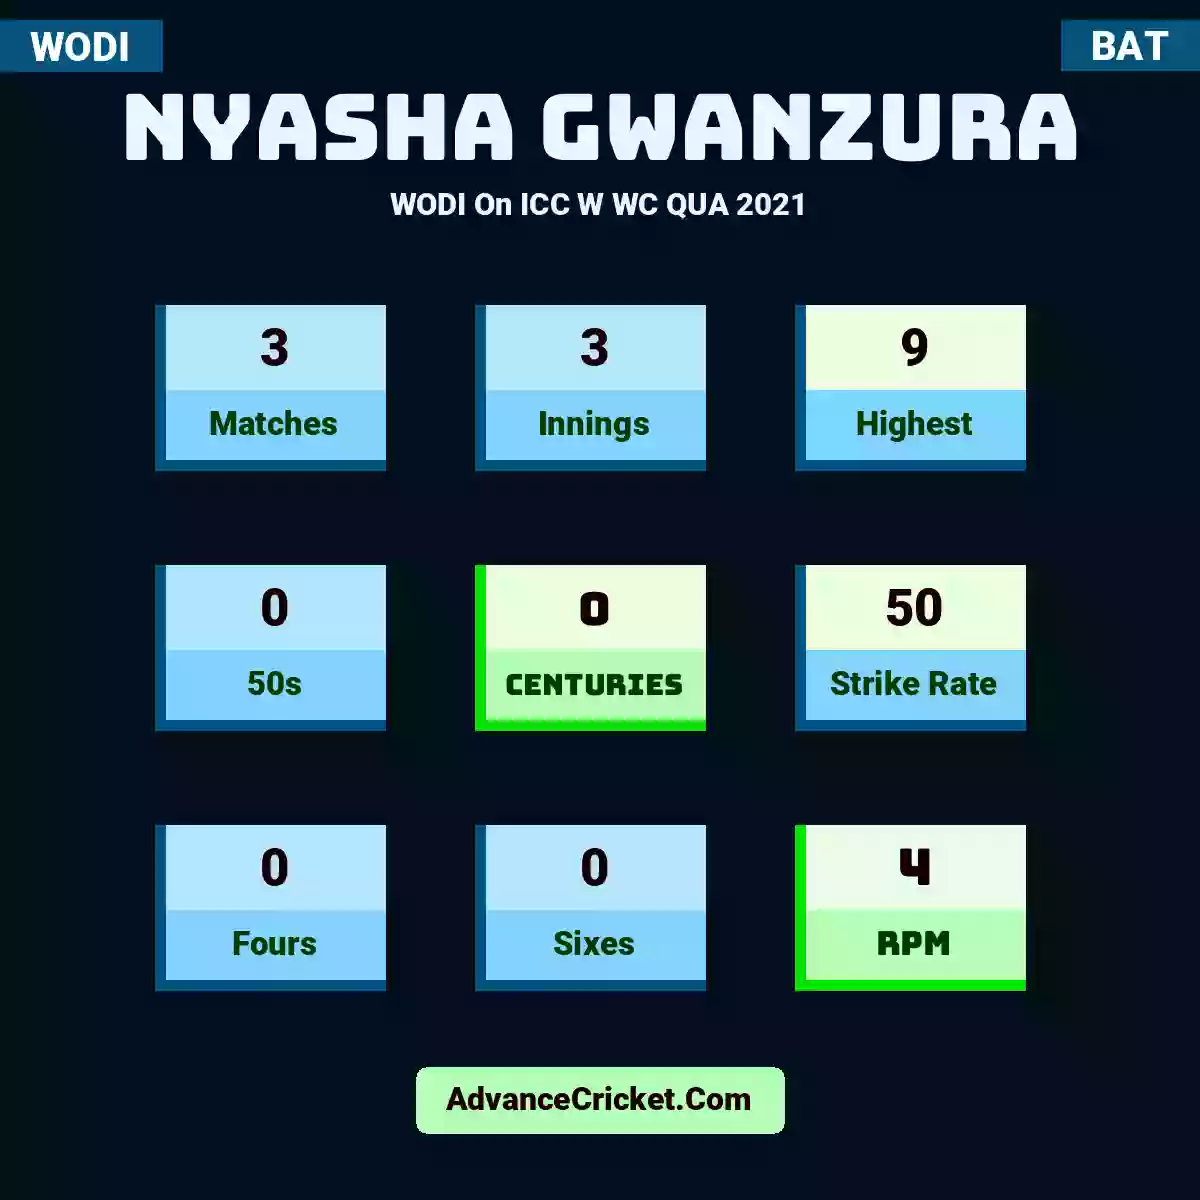 Nyasha Gwanzura WODI  On ICC W WC QUA 2021, Nyasha Gwanzura played 3 matches, scored 9 runs as highest, 0 half-centuries, and 0 centuries, with a strike rate of 50. N.Gwanzura hit 0 fours and 0 sixes, with an RPM of 4.